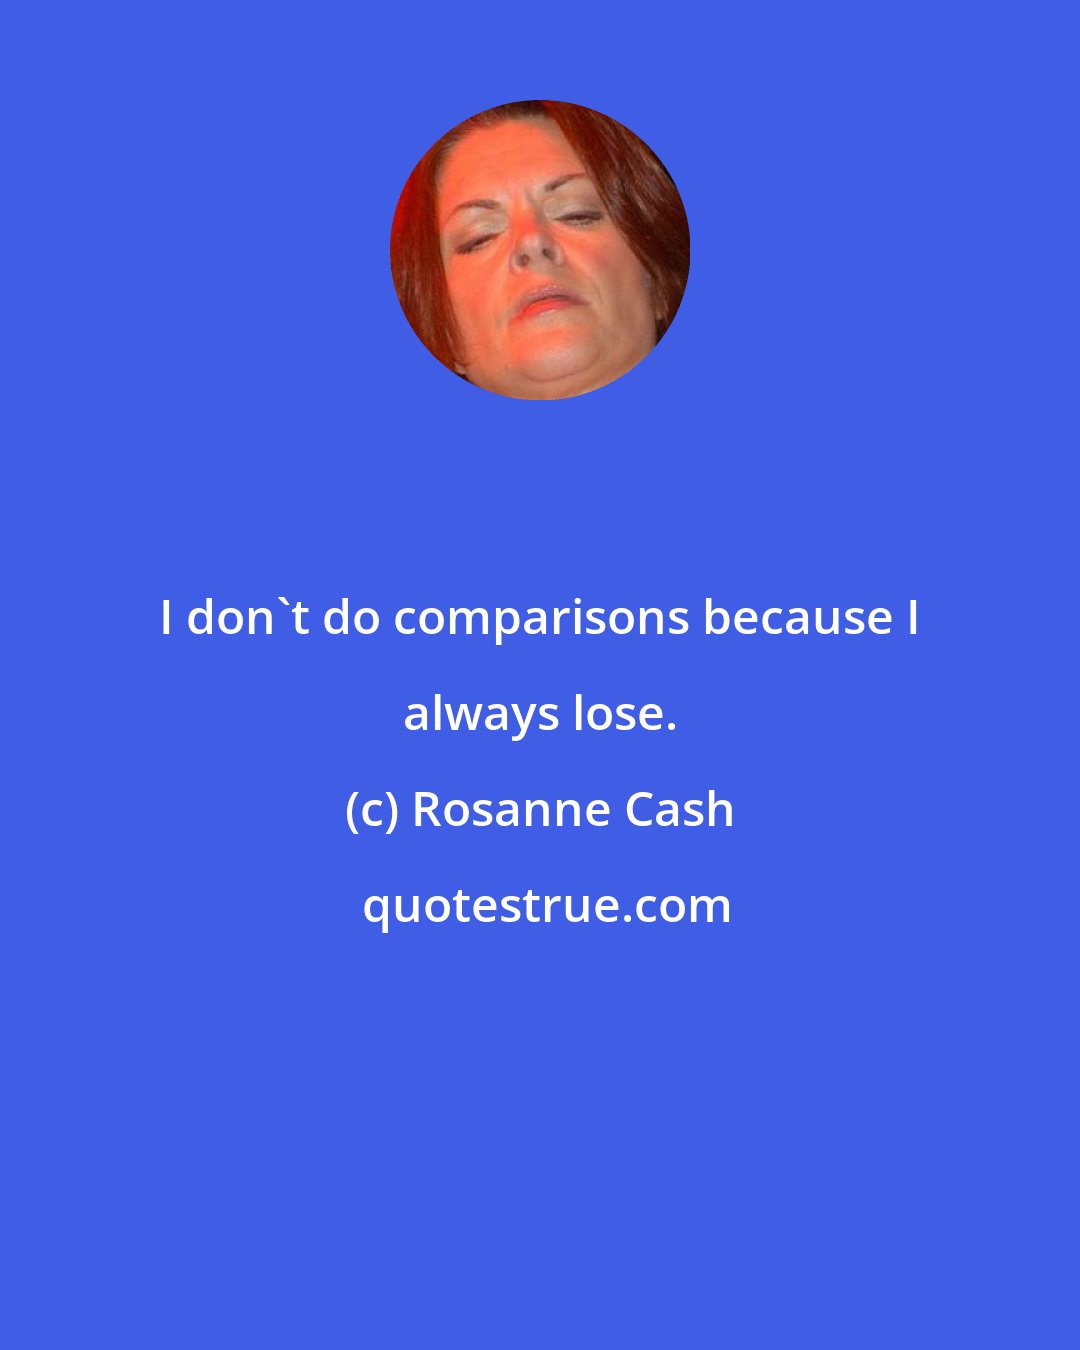 Rosanne Cash: I don't do comparisons because I always lose.